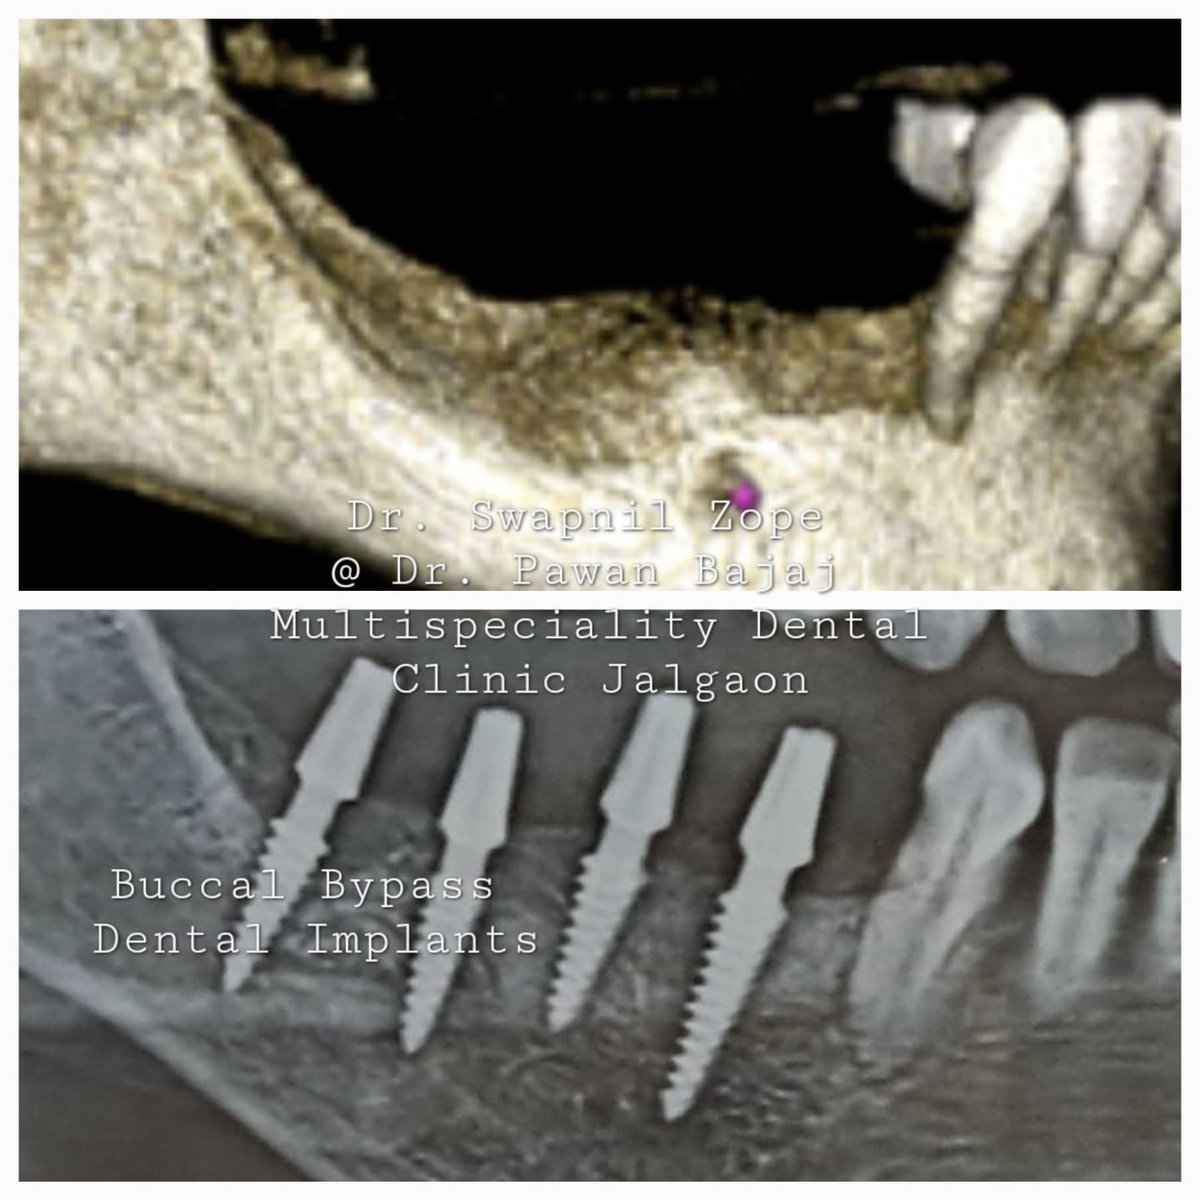 'Bypassing the Ordinary: Buccal Implants for a Grin-Worthy Smile!' 

#BasalImplants
#CompressiveImplants
#DentalSurgery
#PermanentTeeth
#Implantology
#OralHealth
#SmileRestoration
#DentalInnovation
#AdvancedImplants
#OralRehabilitation